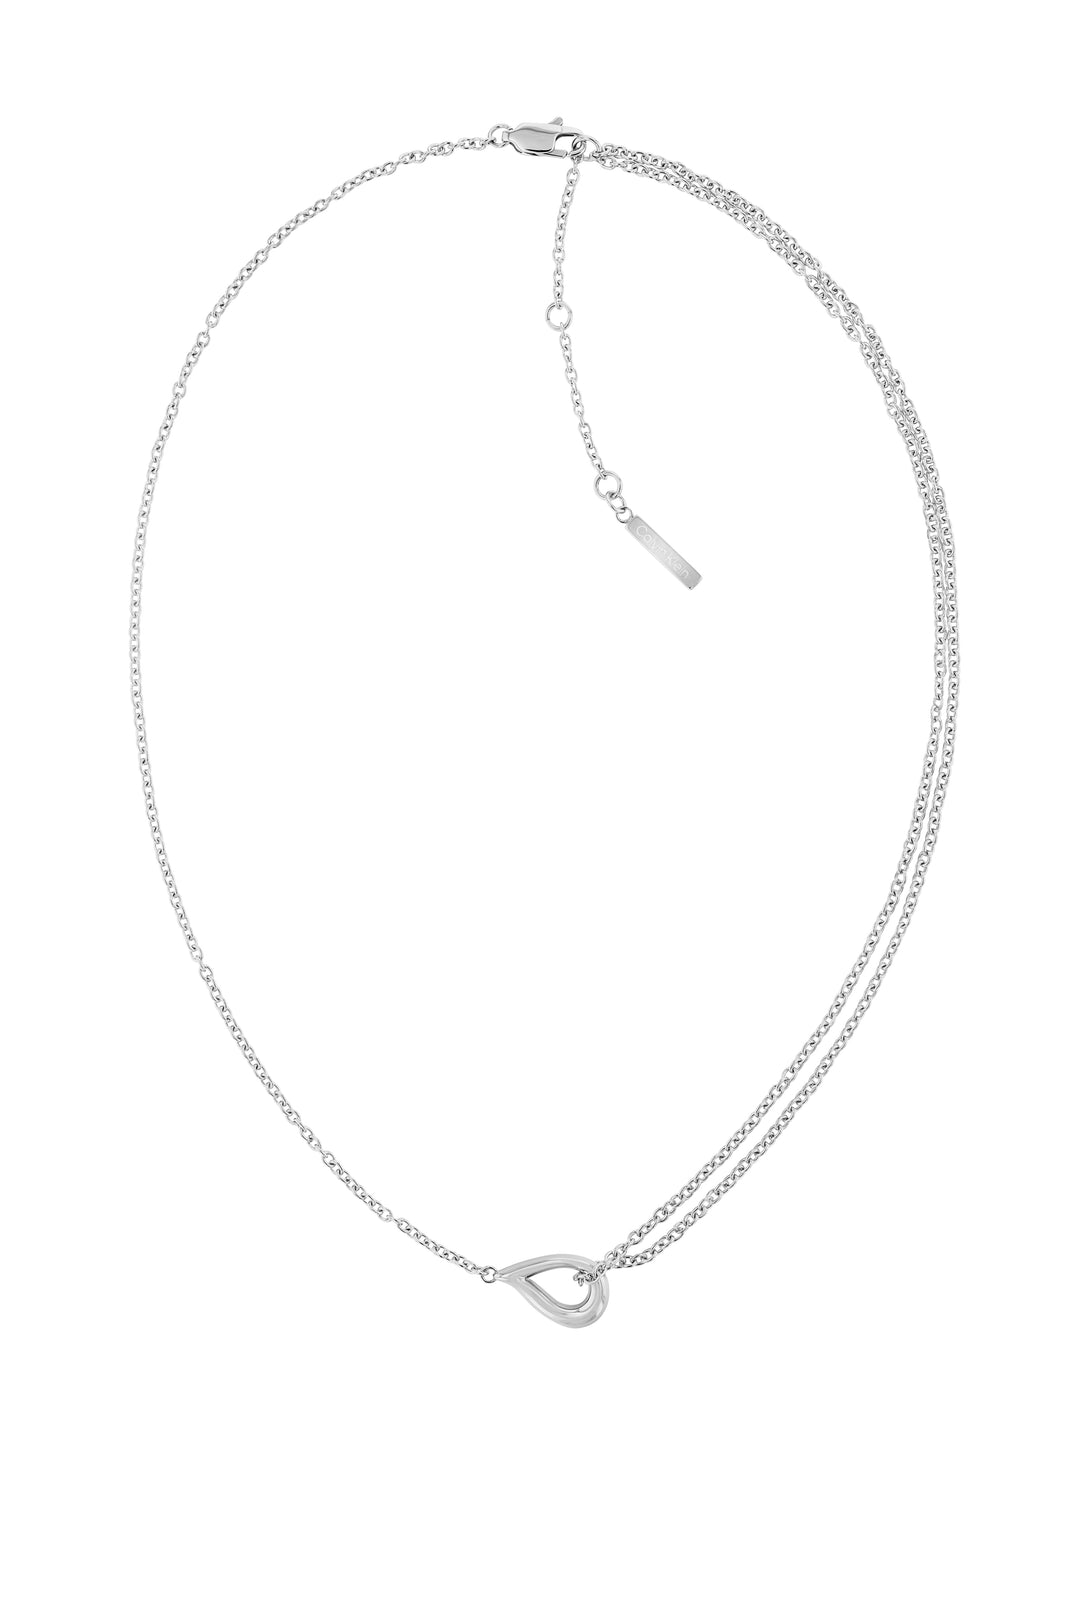 CK Sculptured Drops Chain Necklace